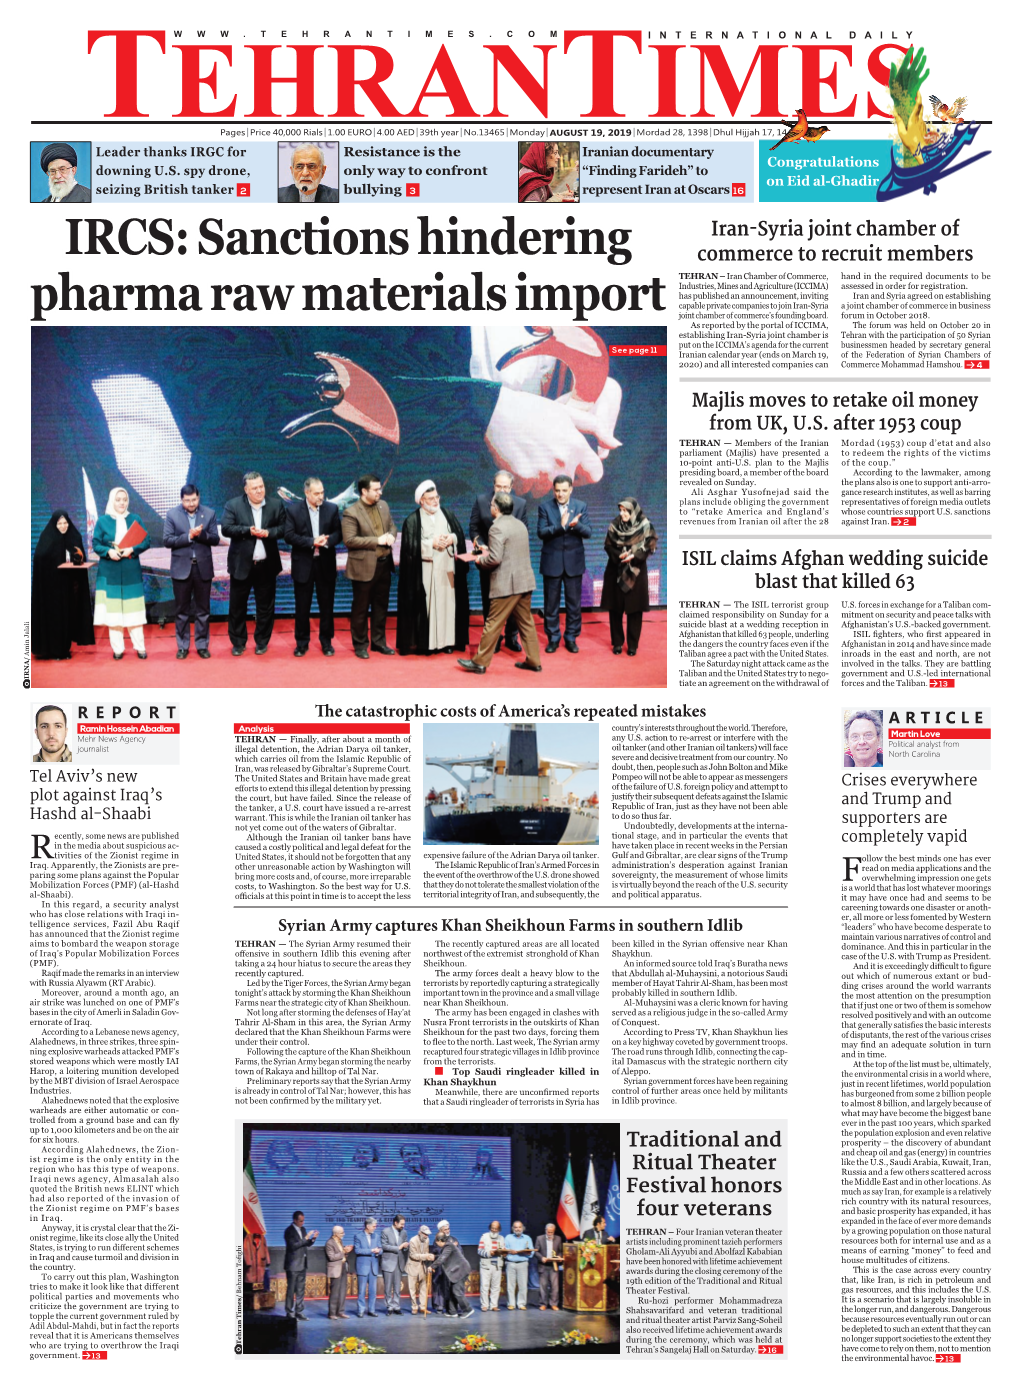 IRCS: Sanctions Hindering Pharma Raw Materials Import